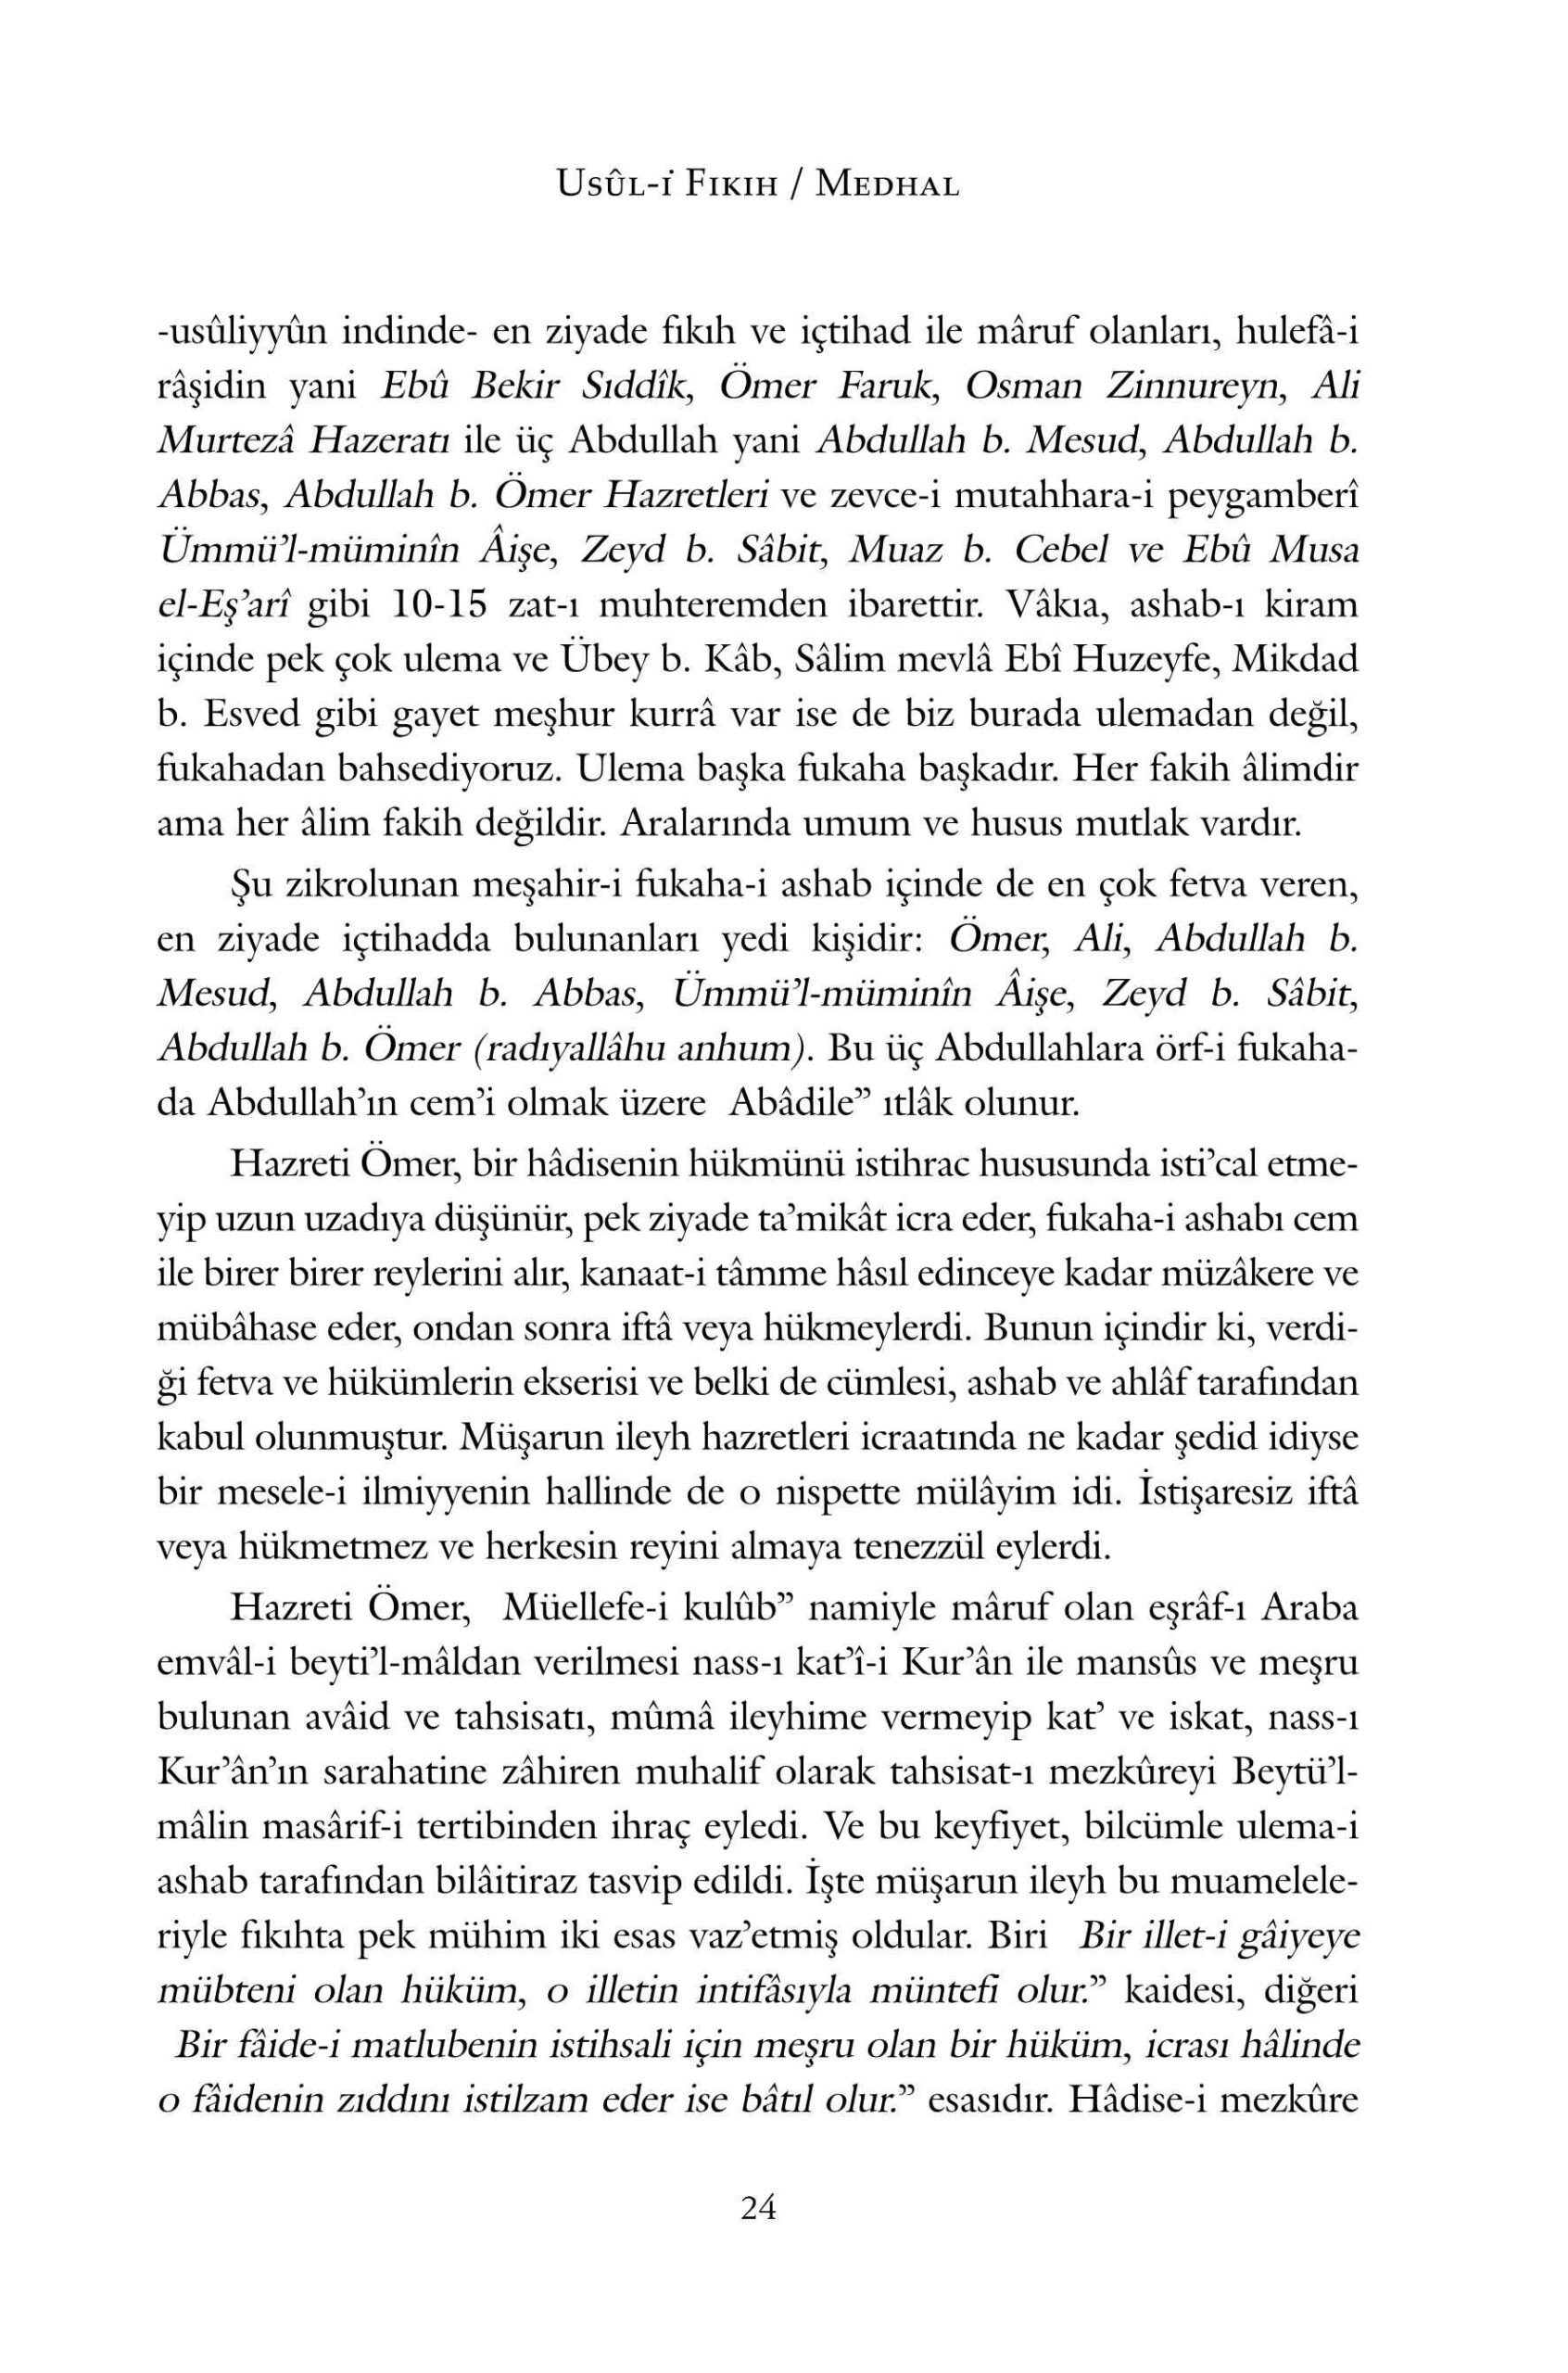 Mehmed Seyit - Usûl-i Fikih (Medhal) - IsikAkademiY.pdf, 556-Sayfa 